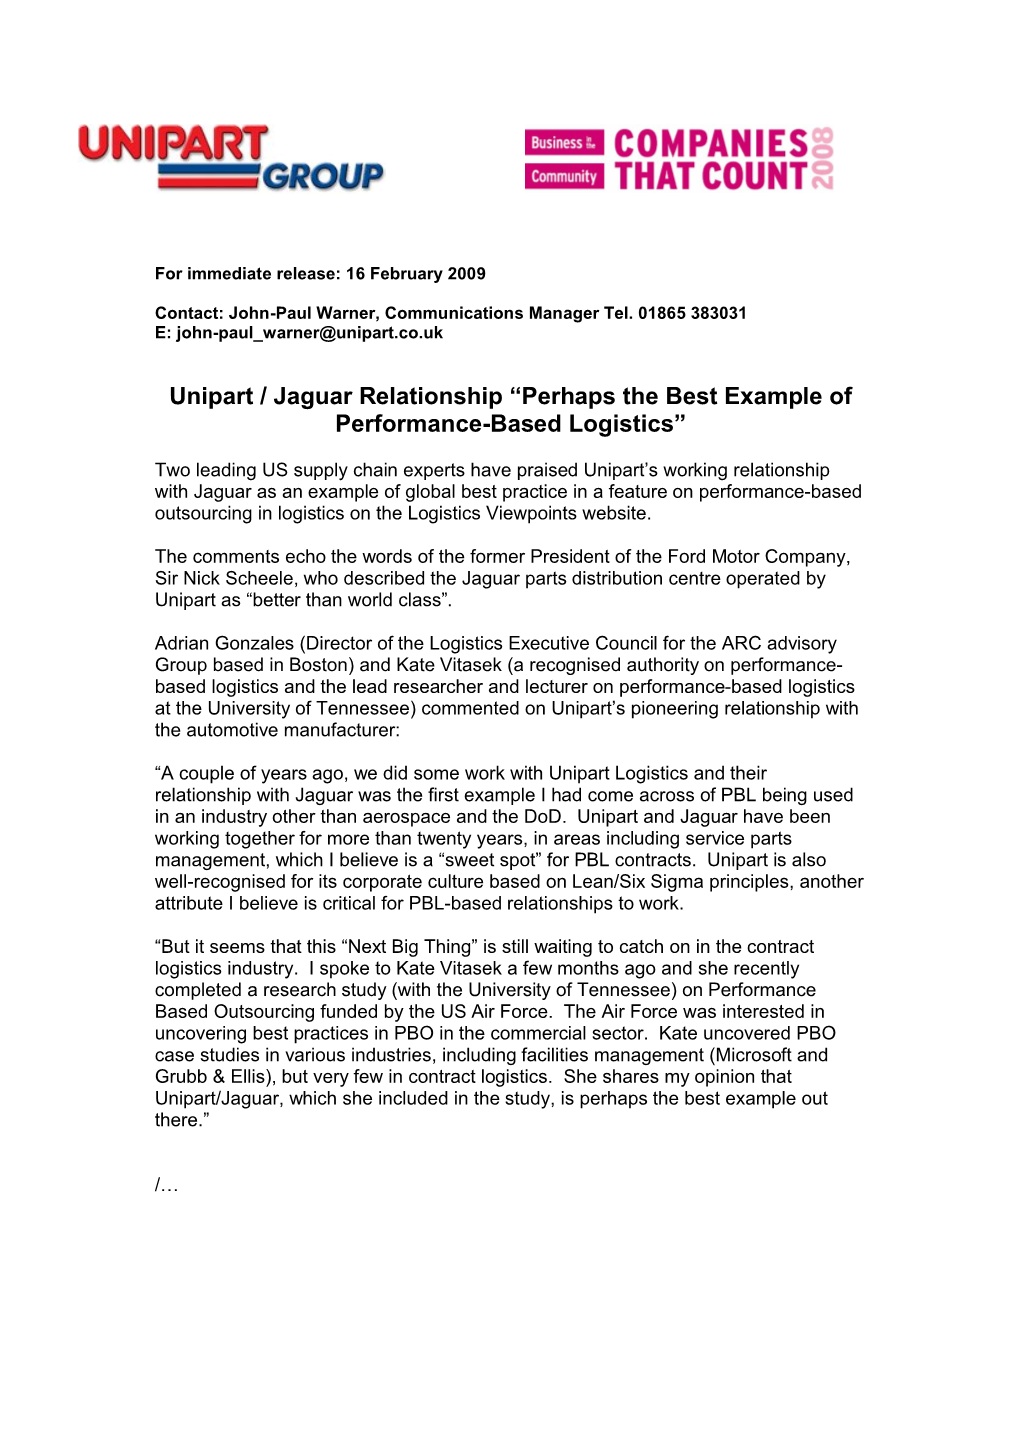 Unipart / Jaguar Relationship “Perhaps the Best Example of Performance-Based Logistics”